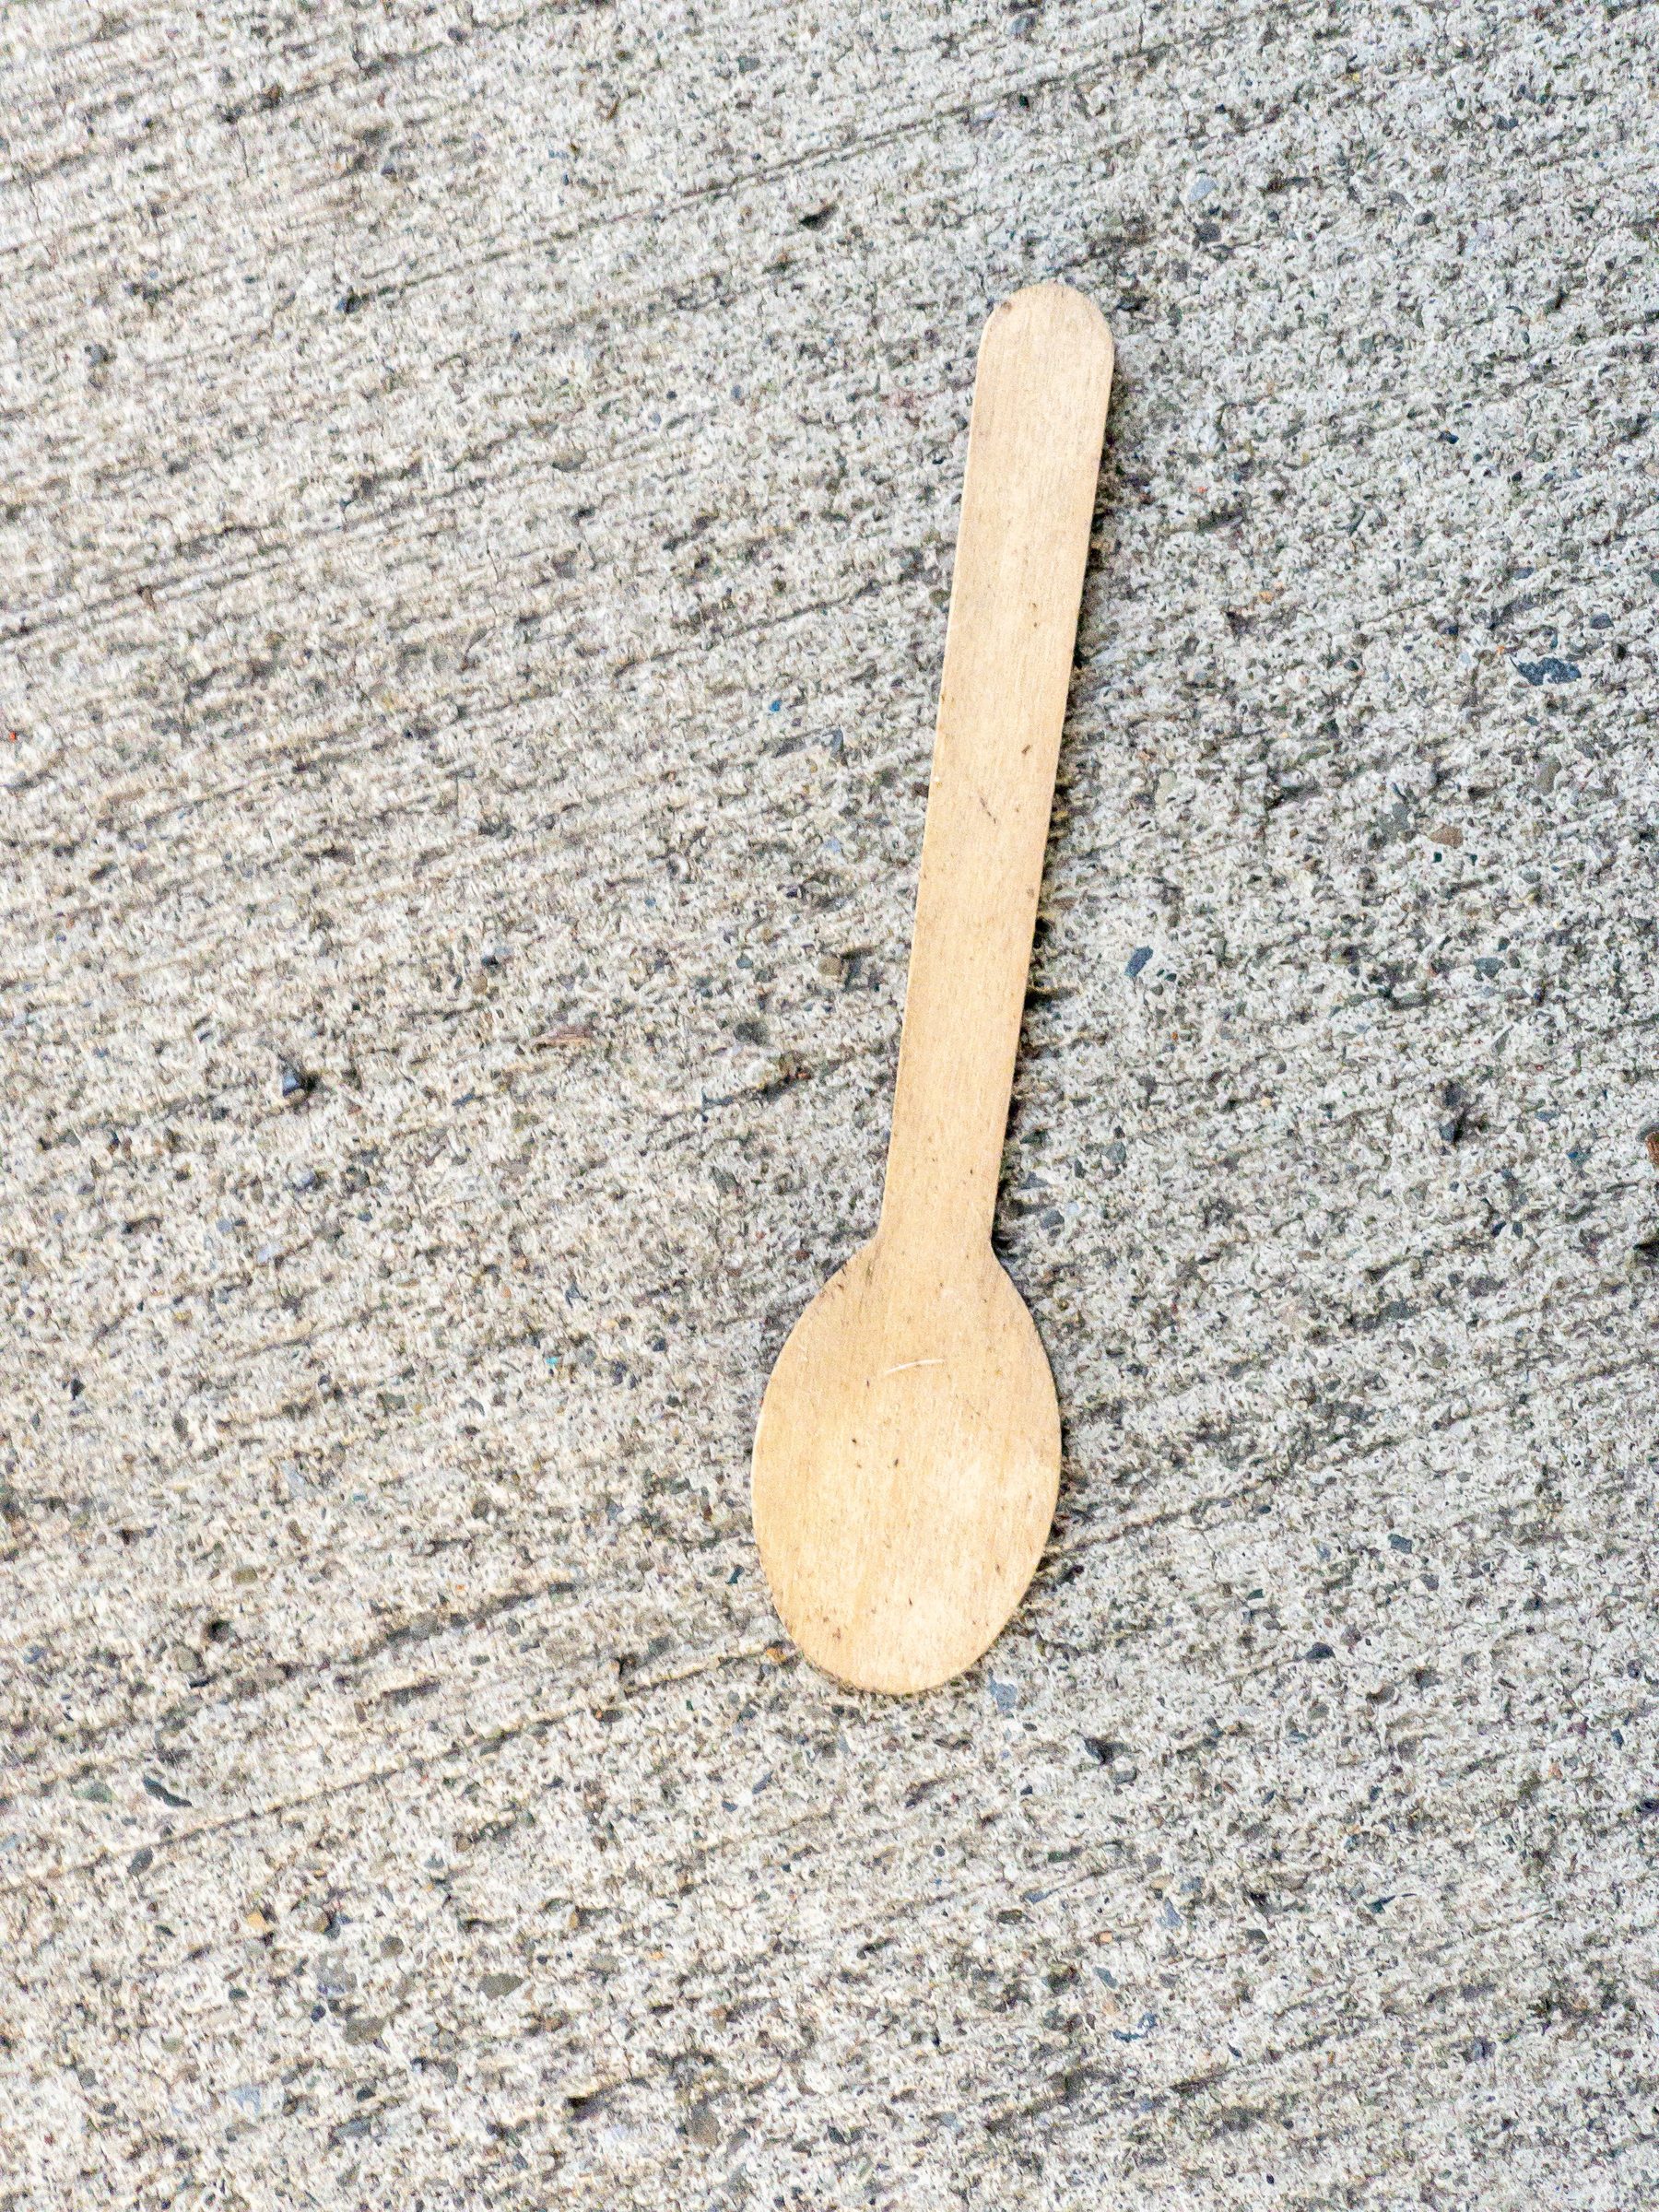 Flat wooden ice cream spoon on concrete sidewalk.